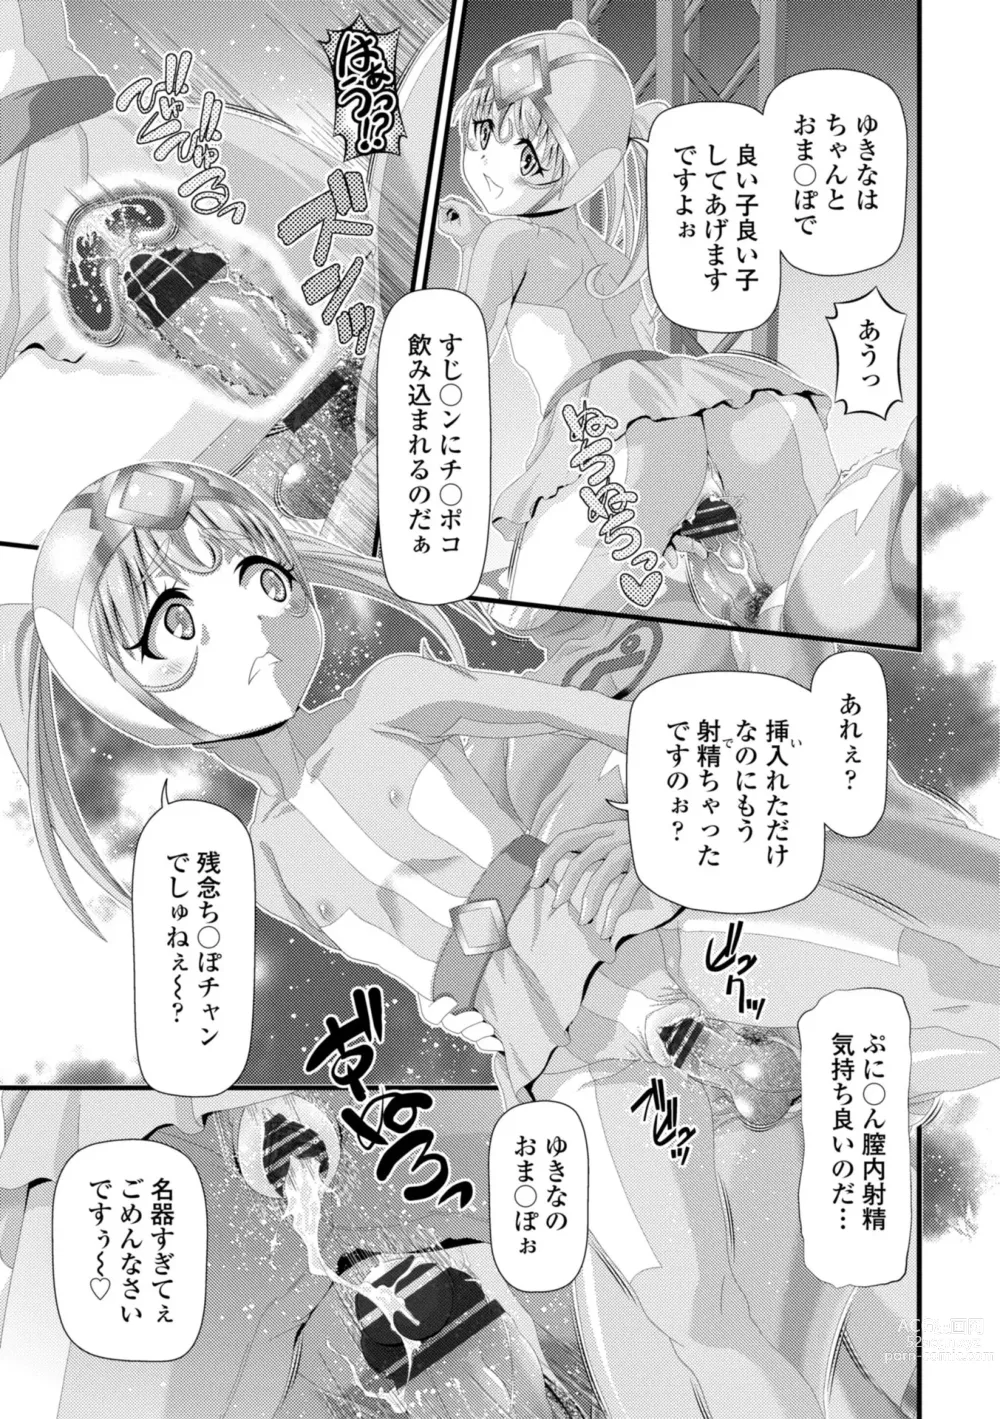 Page 9 of manga minimum material 1